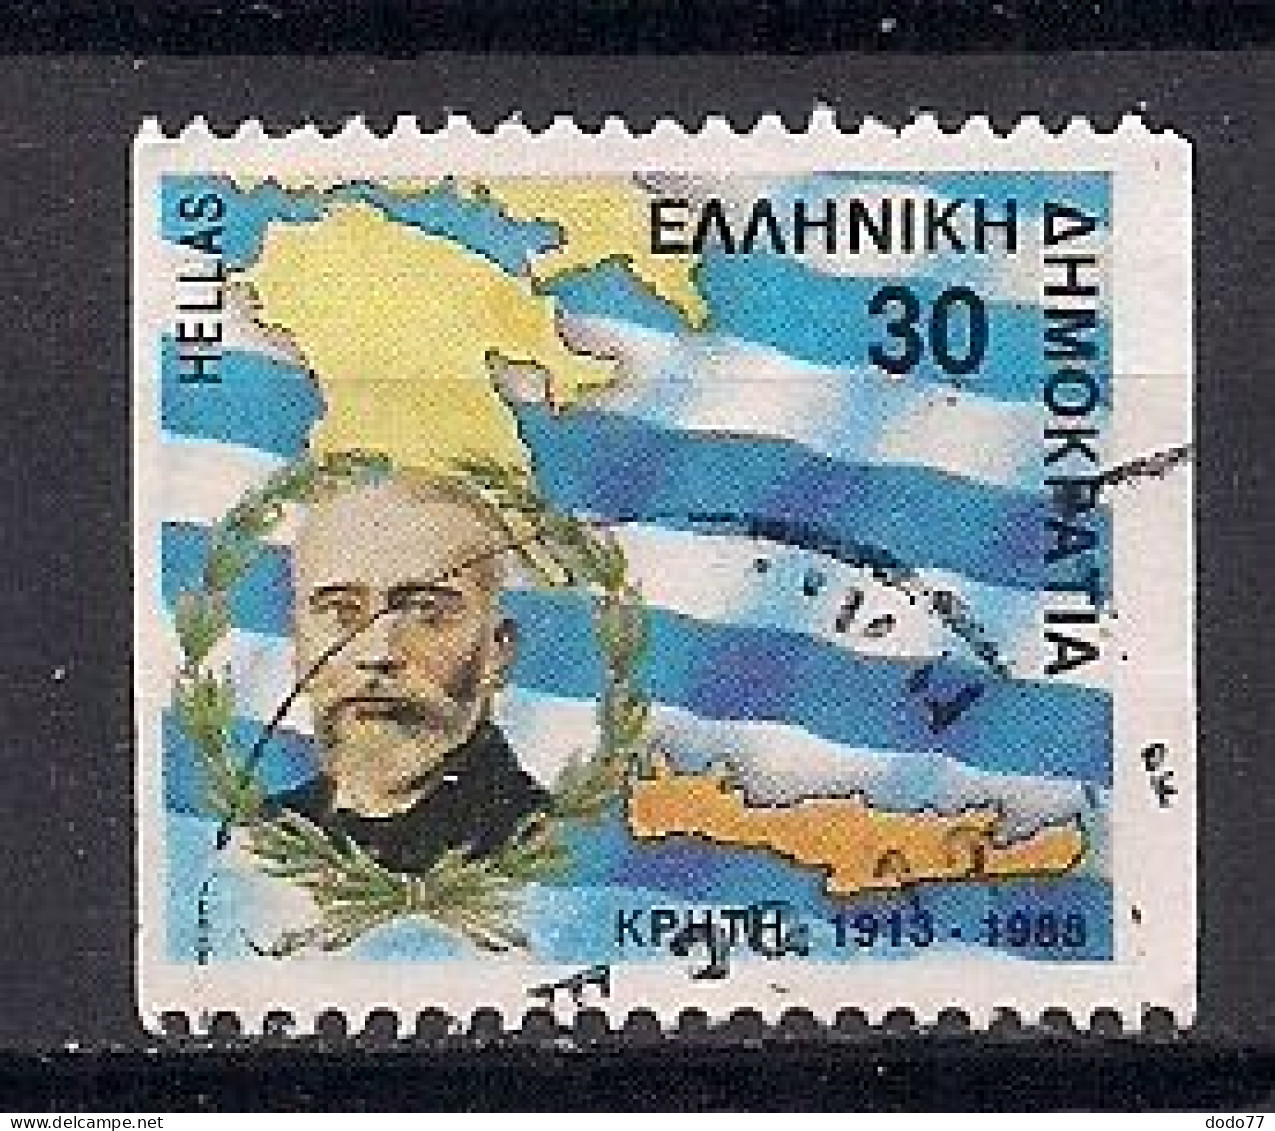 GRECE   N°  1678  OBLITERE - Used Stamps